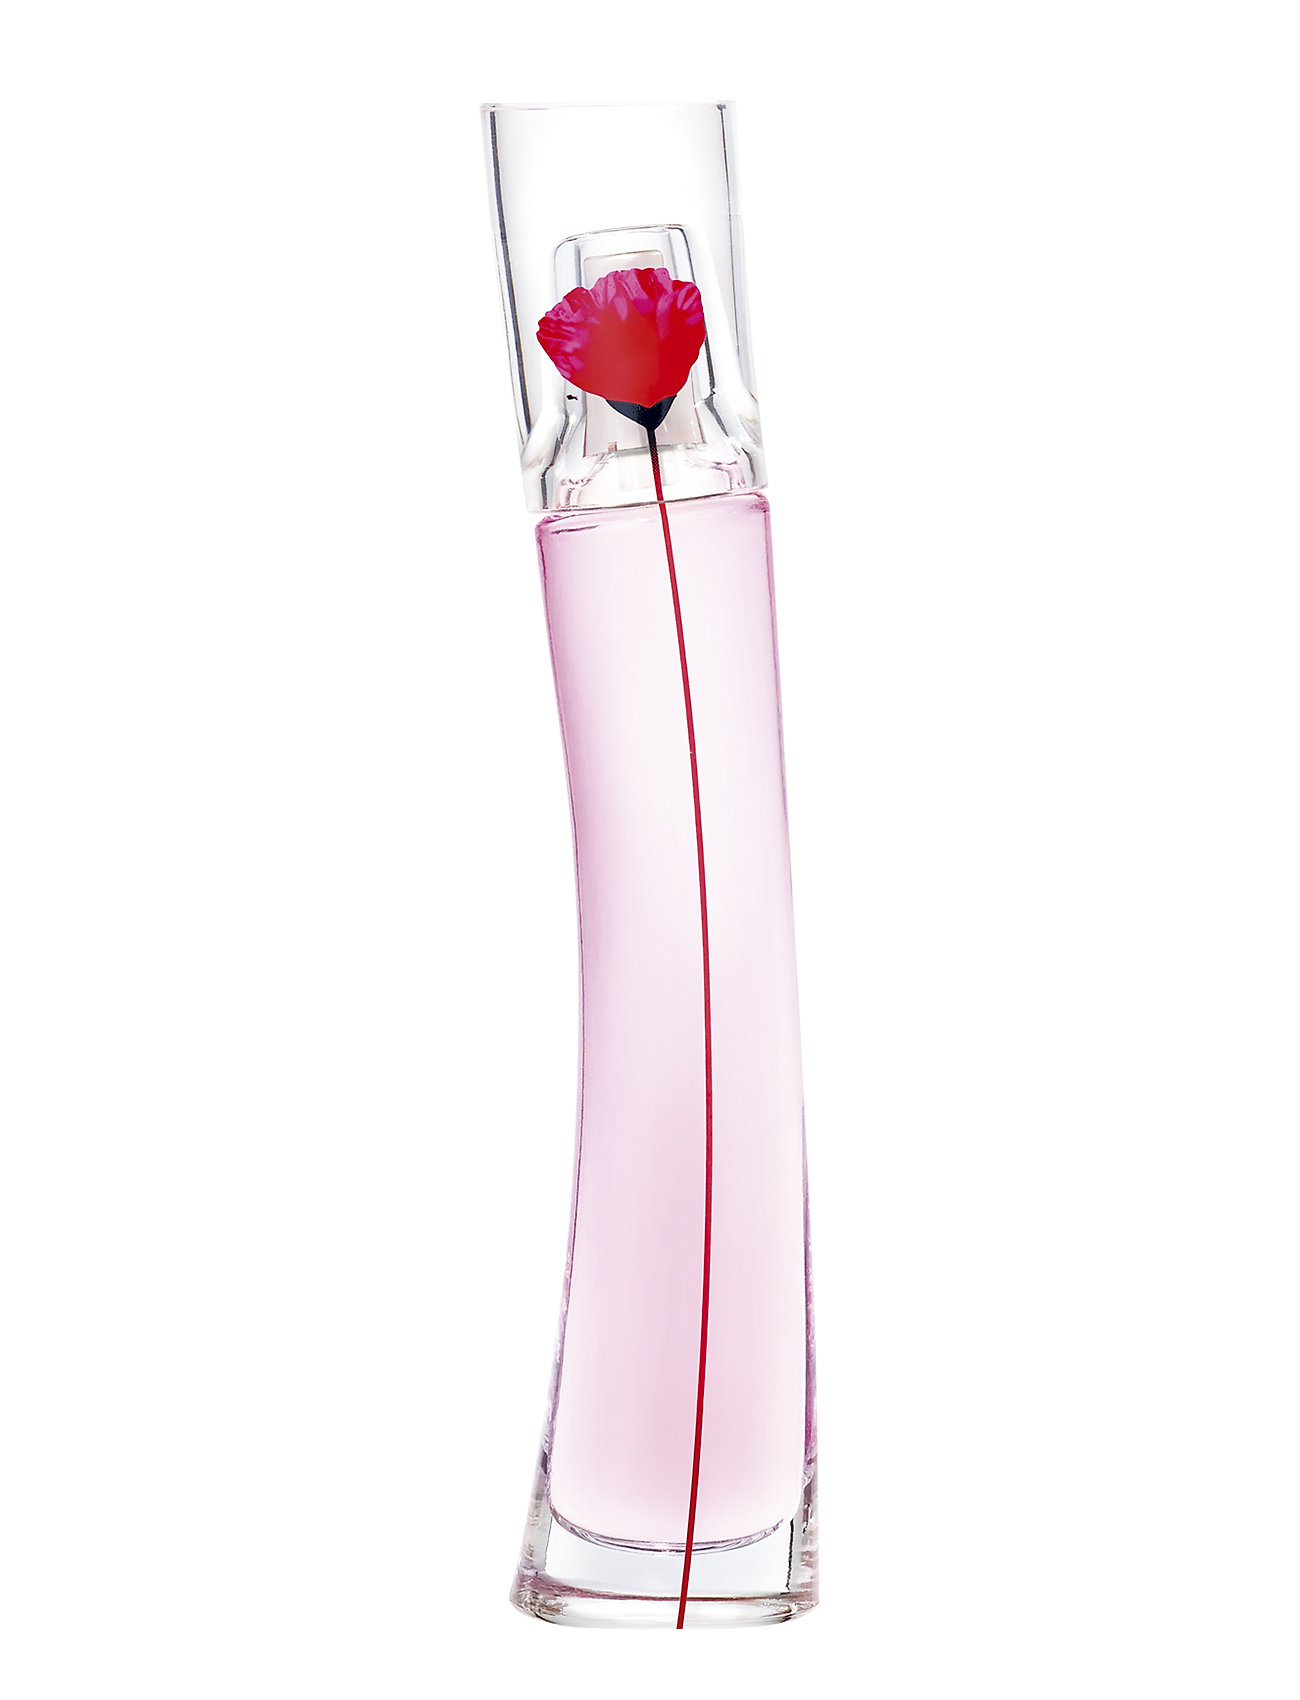 "Kenzo Fragrance" "Flower By Kenzo Poppy Bouqueteau De Parfum Parfume Eau